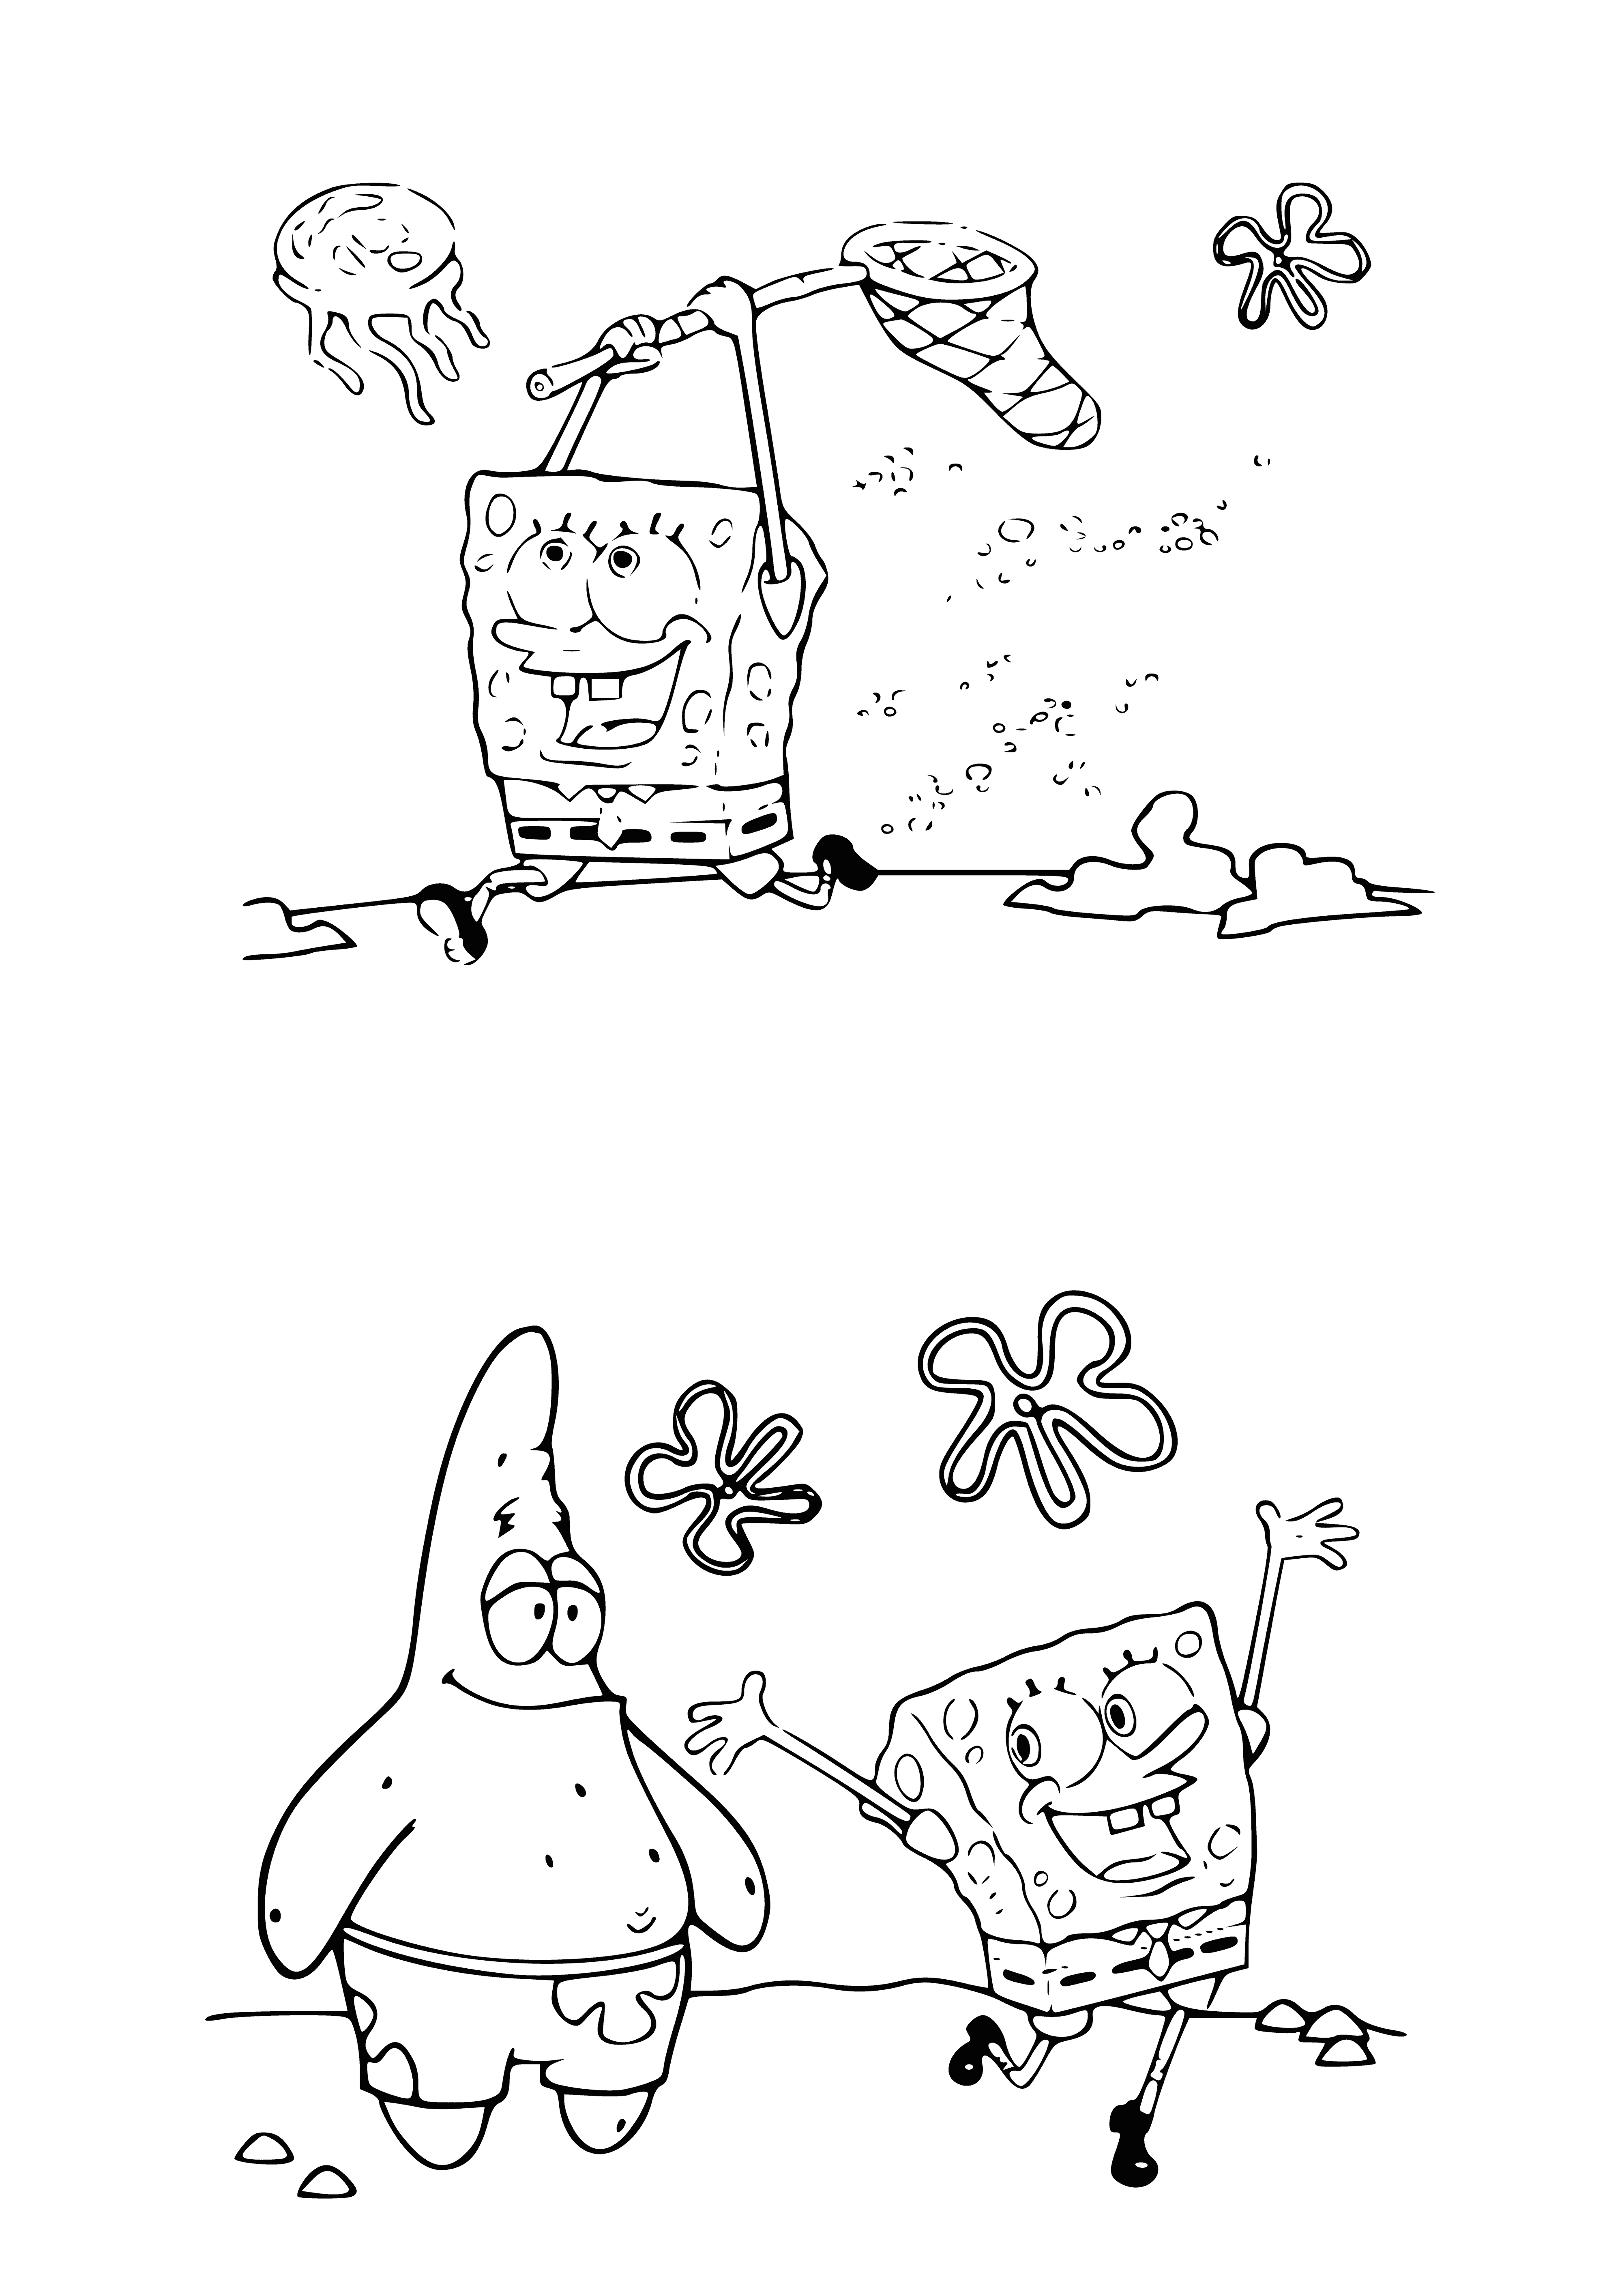 Patrick and SpongeBob coloring page